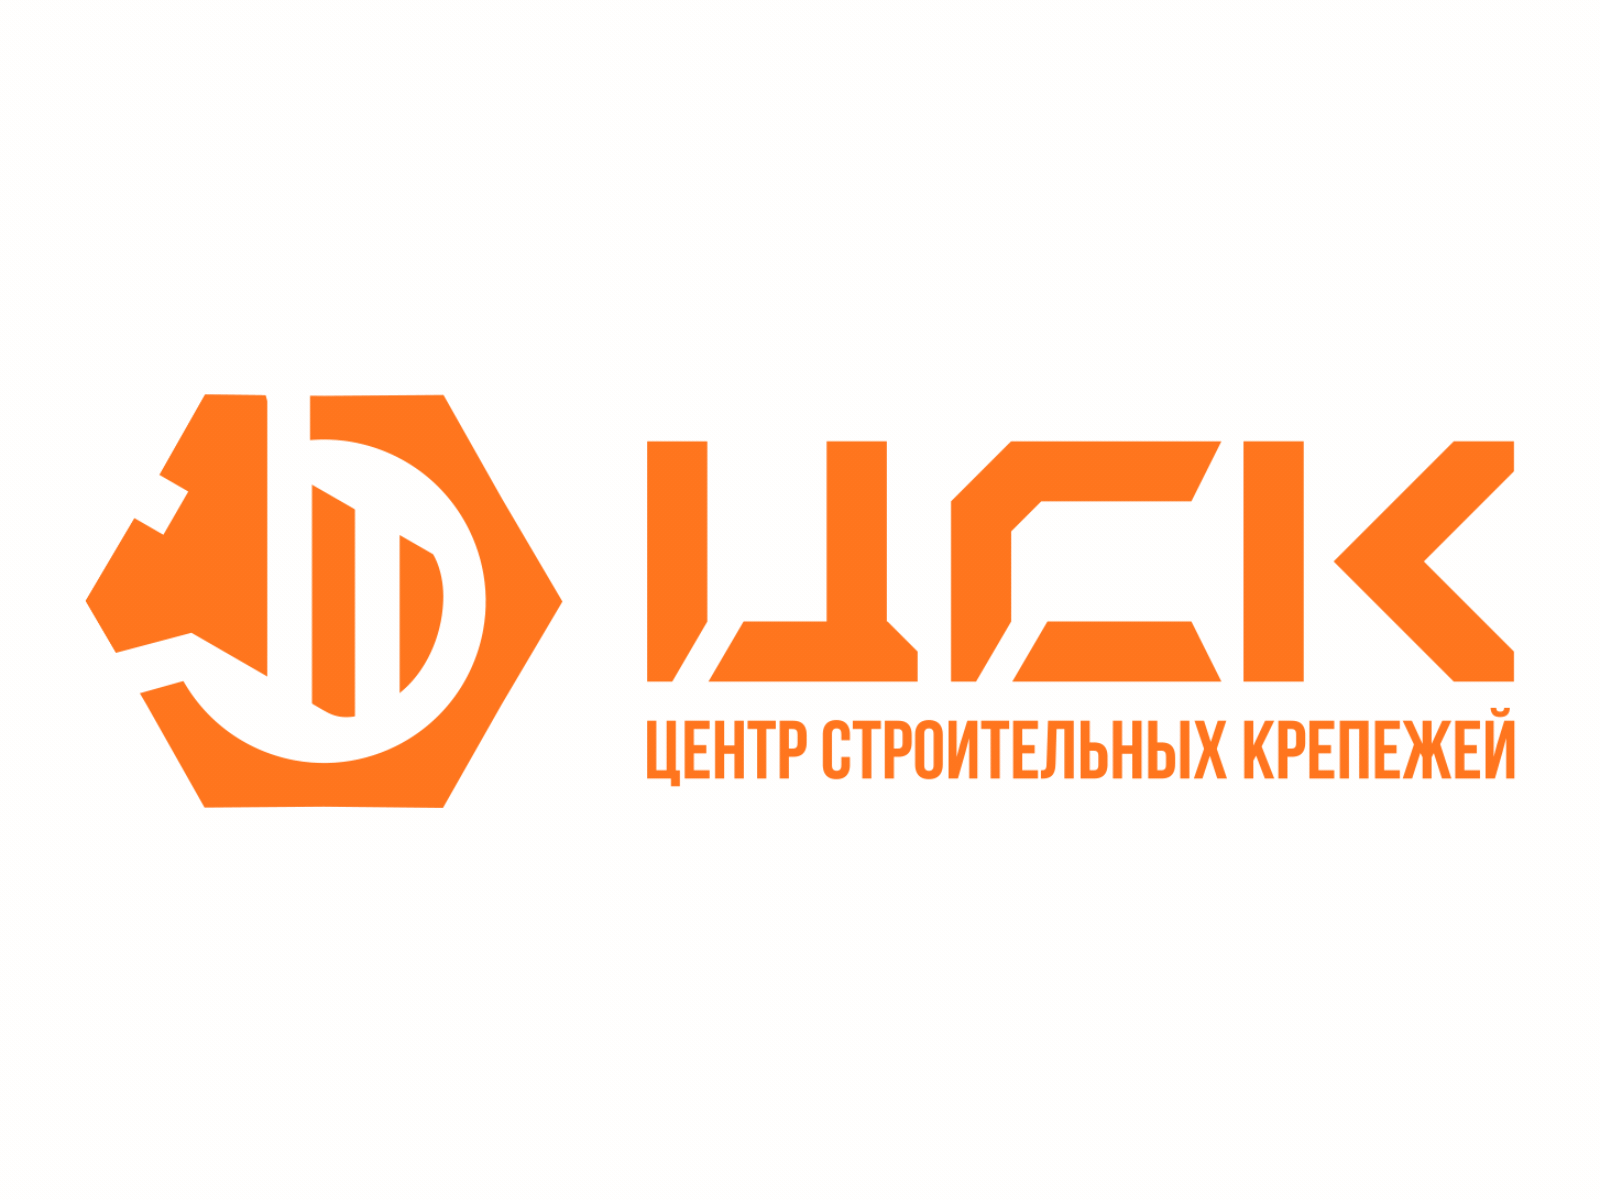 CSK logo animation